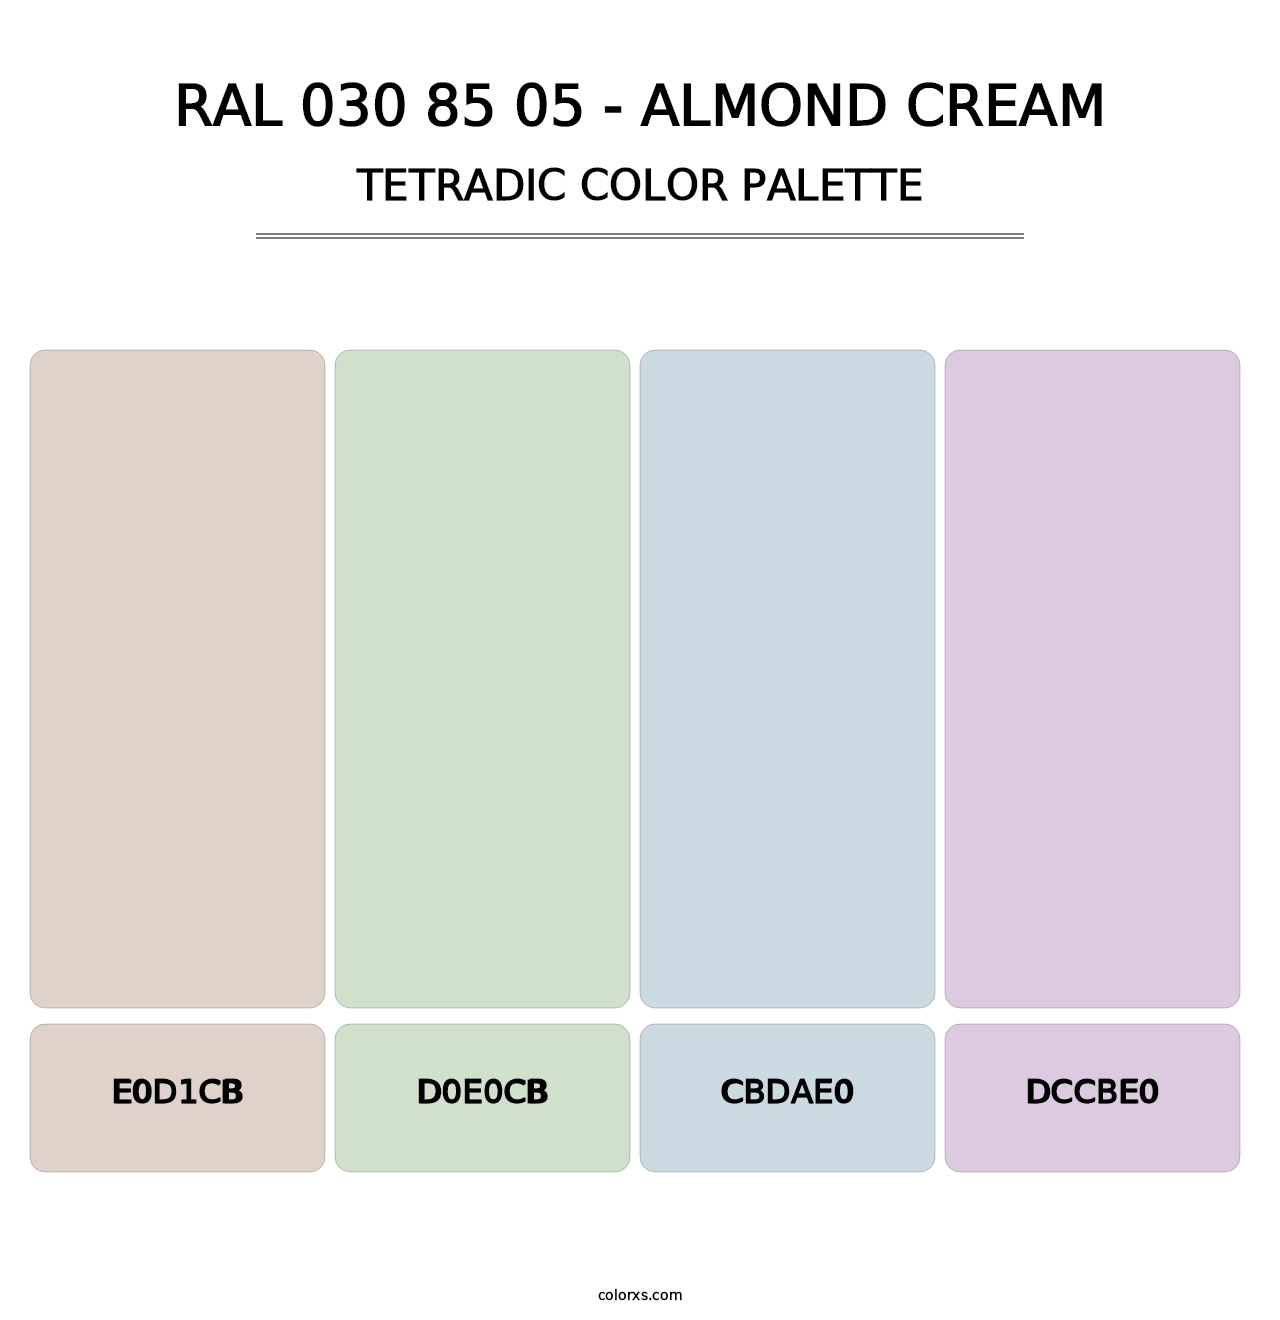 RAL 030 85 05 - Almond Cream - Tetradic Color Palette